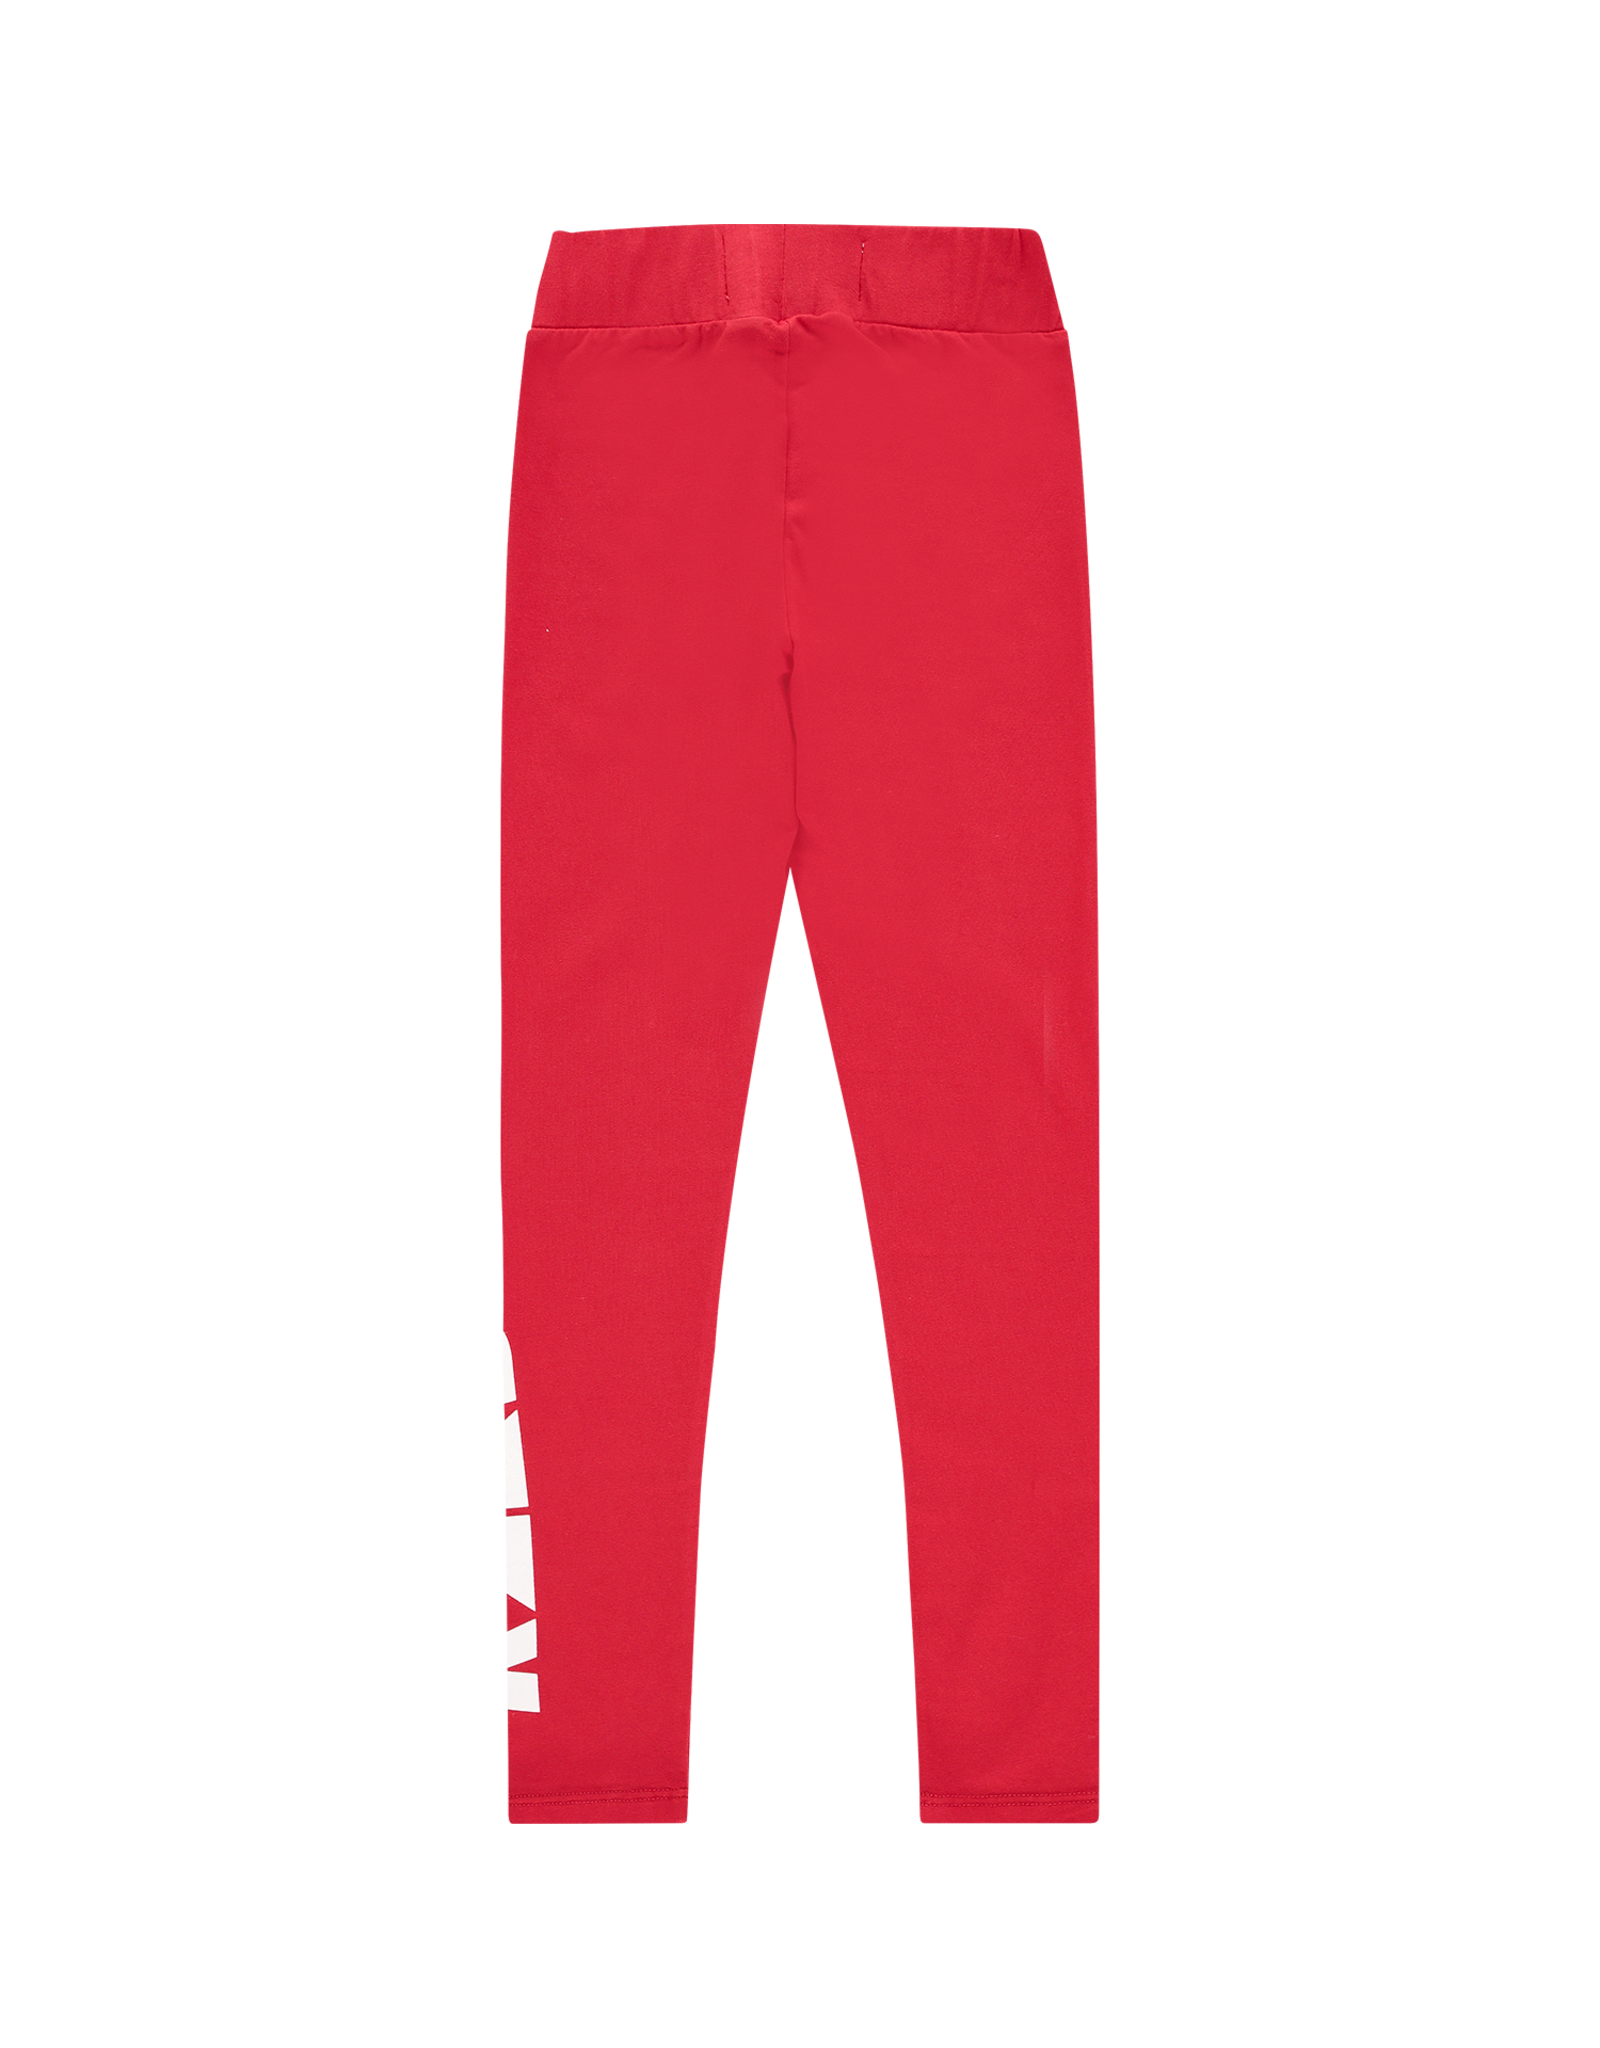 Raizzed Soerabaya 607 Blast Red legging